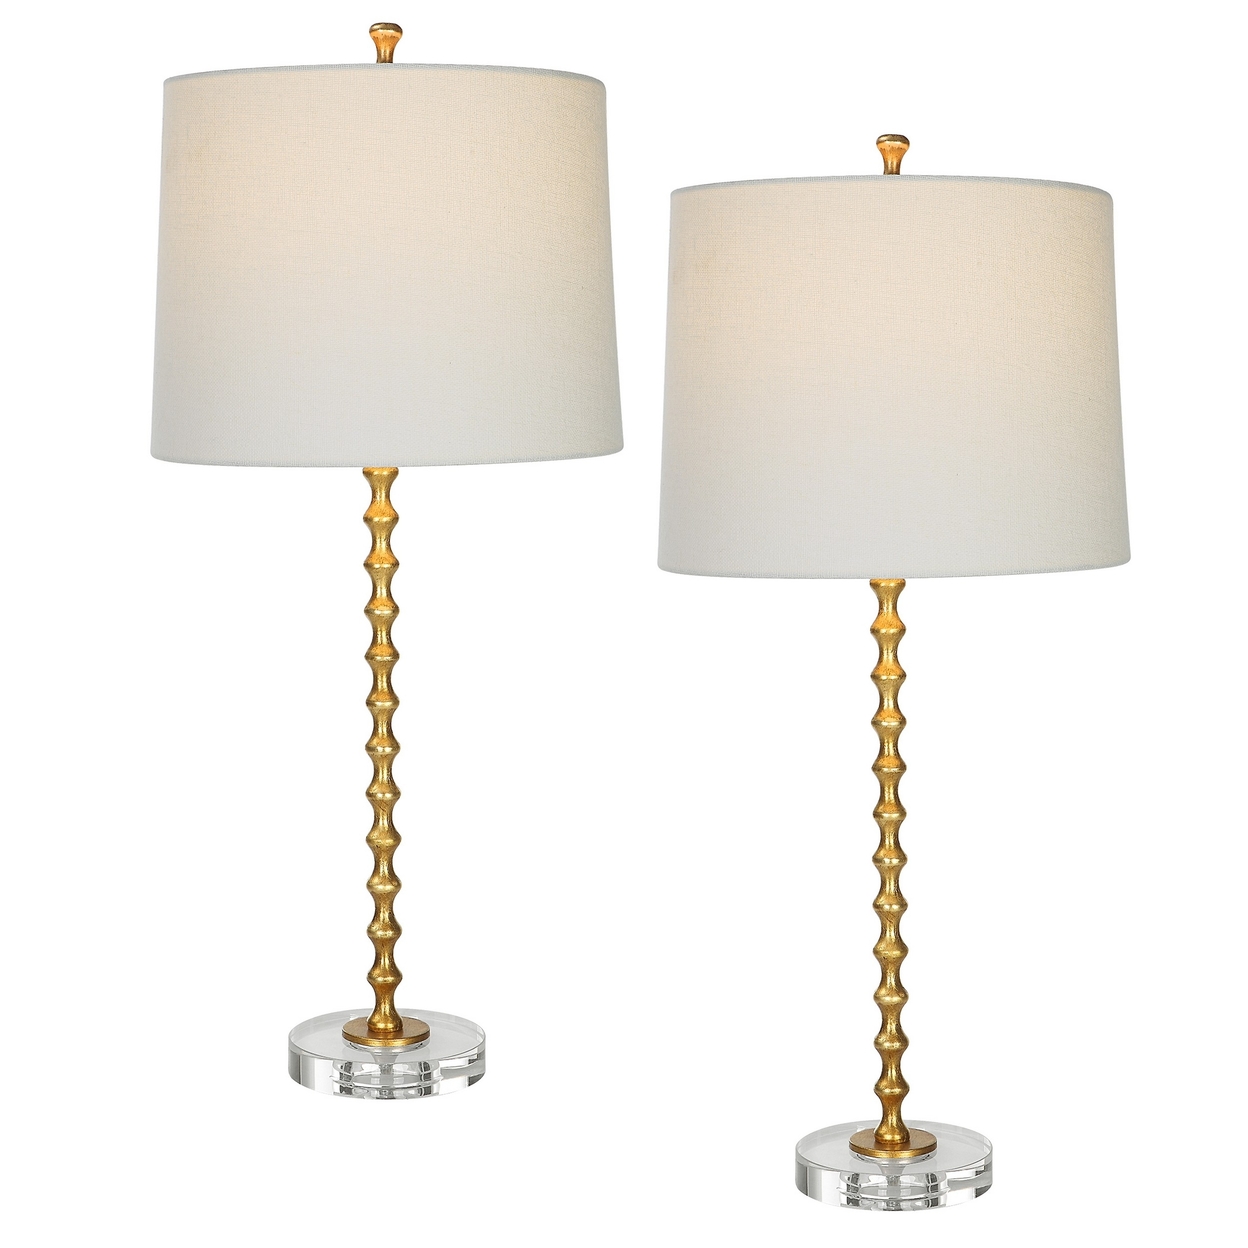 29 Inch Table Lamp, Set Of 2, White Tapered Shade, Gold Leaf, Round Base -Saltoro Sherpi